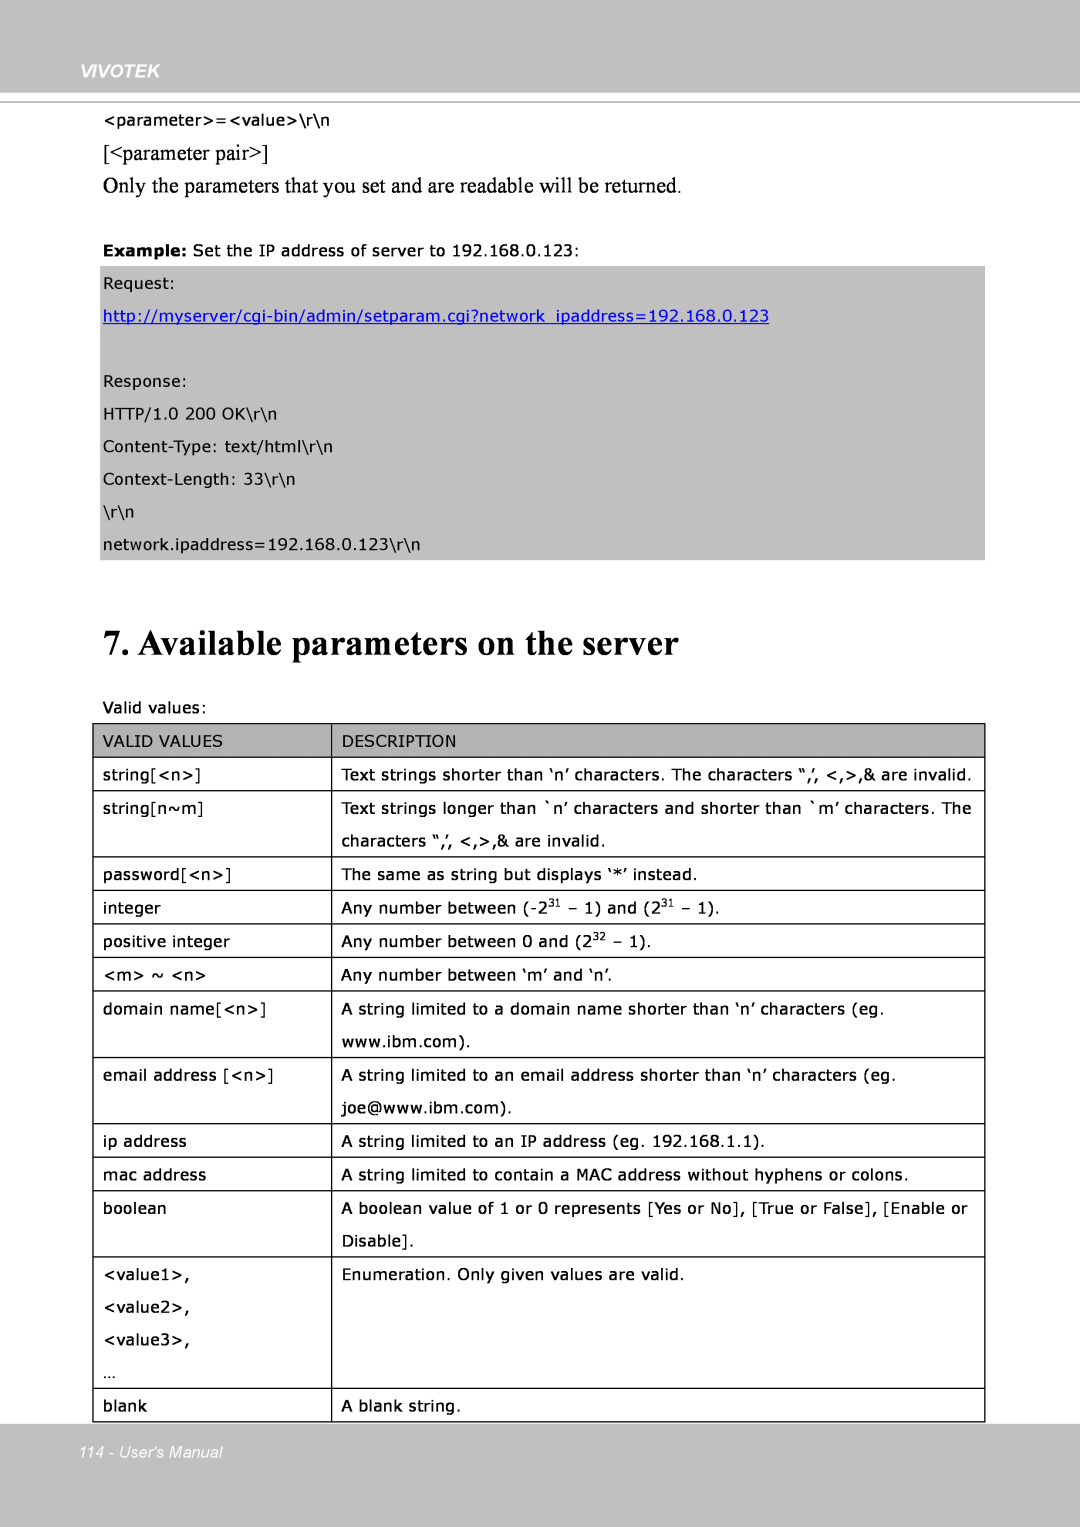 Vivotek IP8352 manual Available parameters on the server, <parameter pair>, Vivotek, Users Manual 